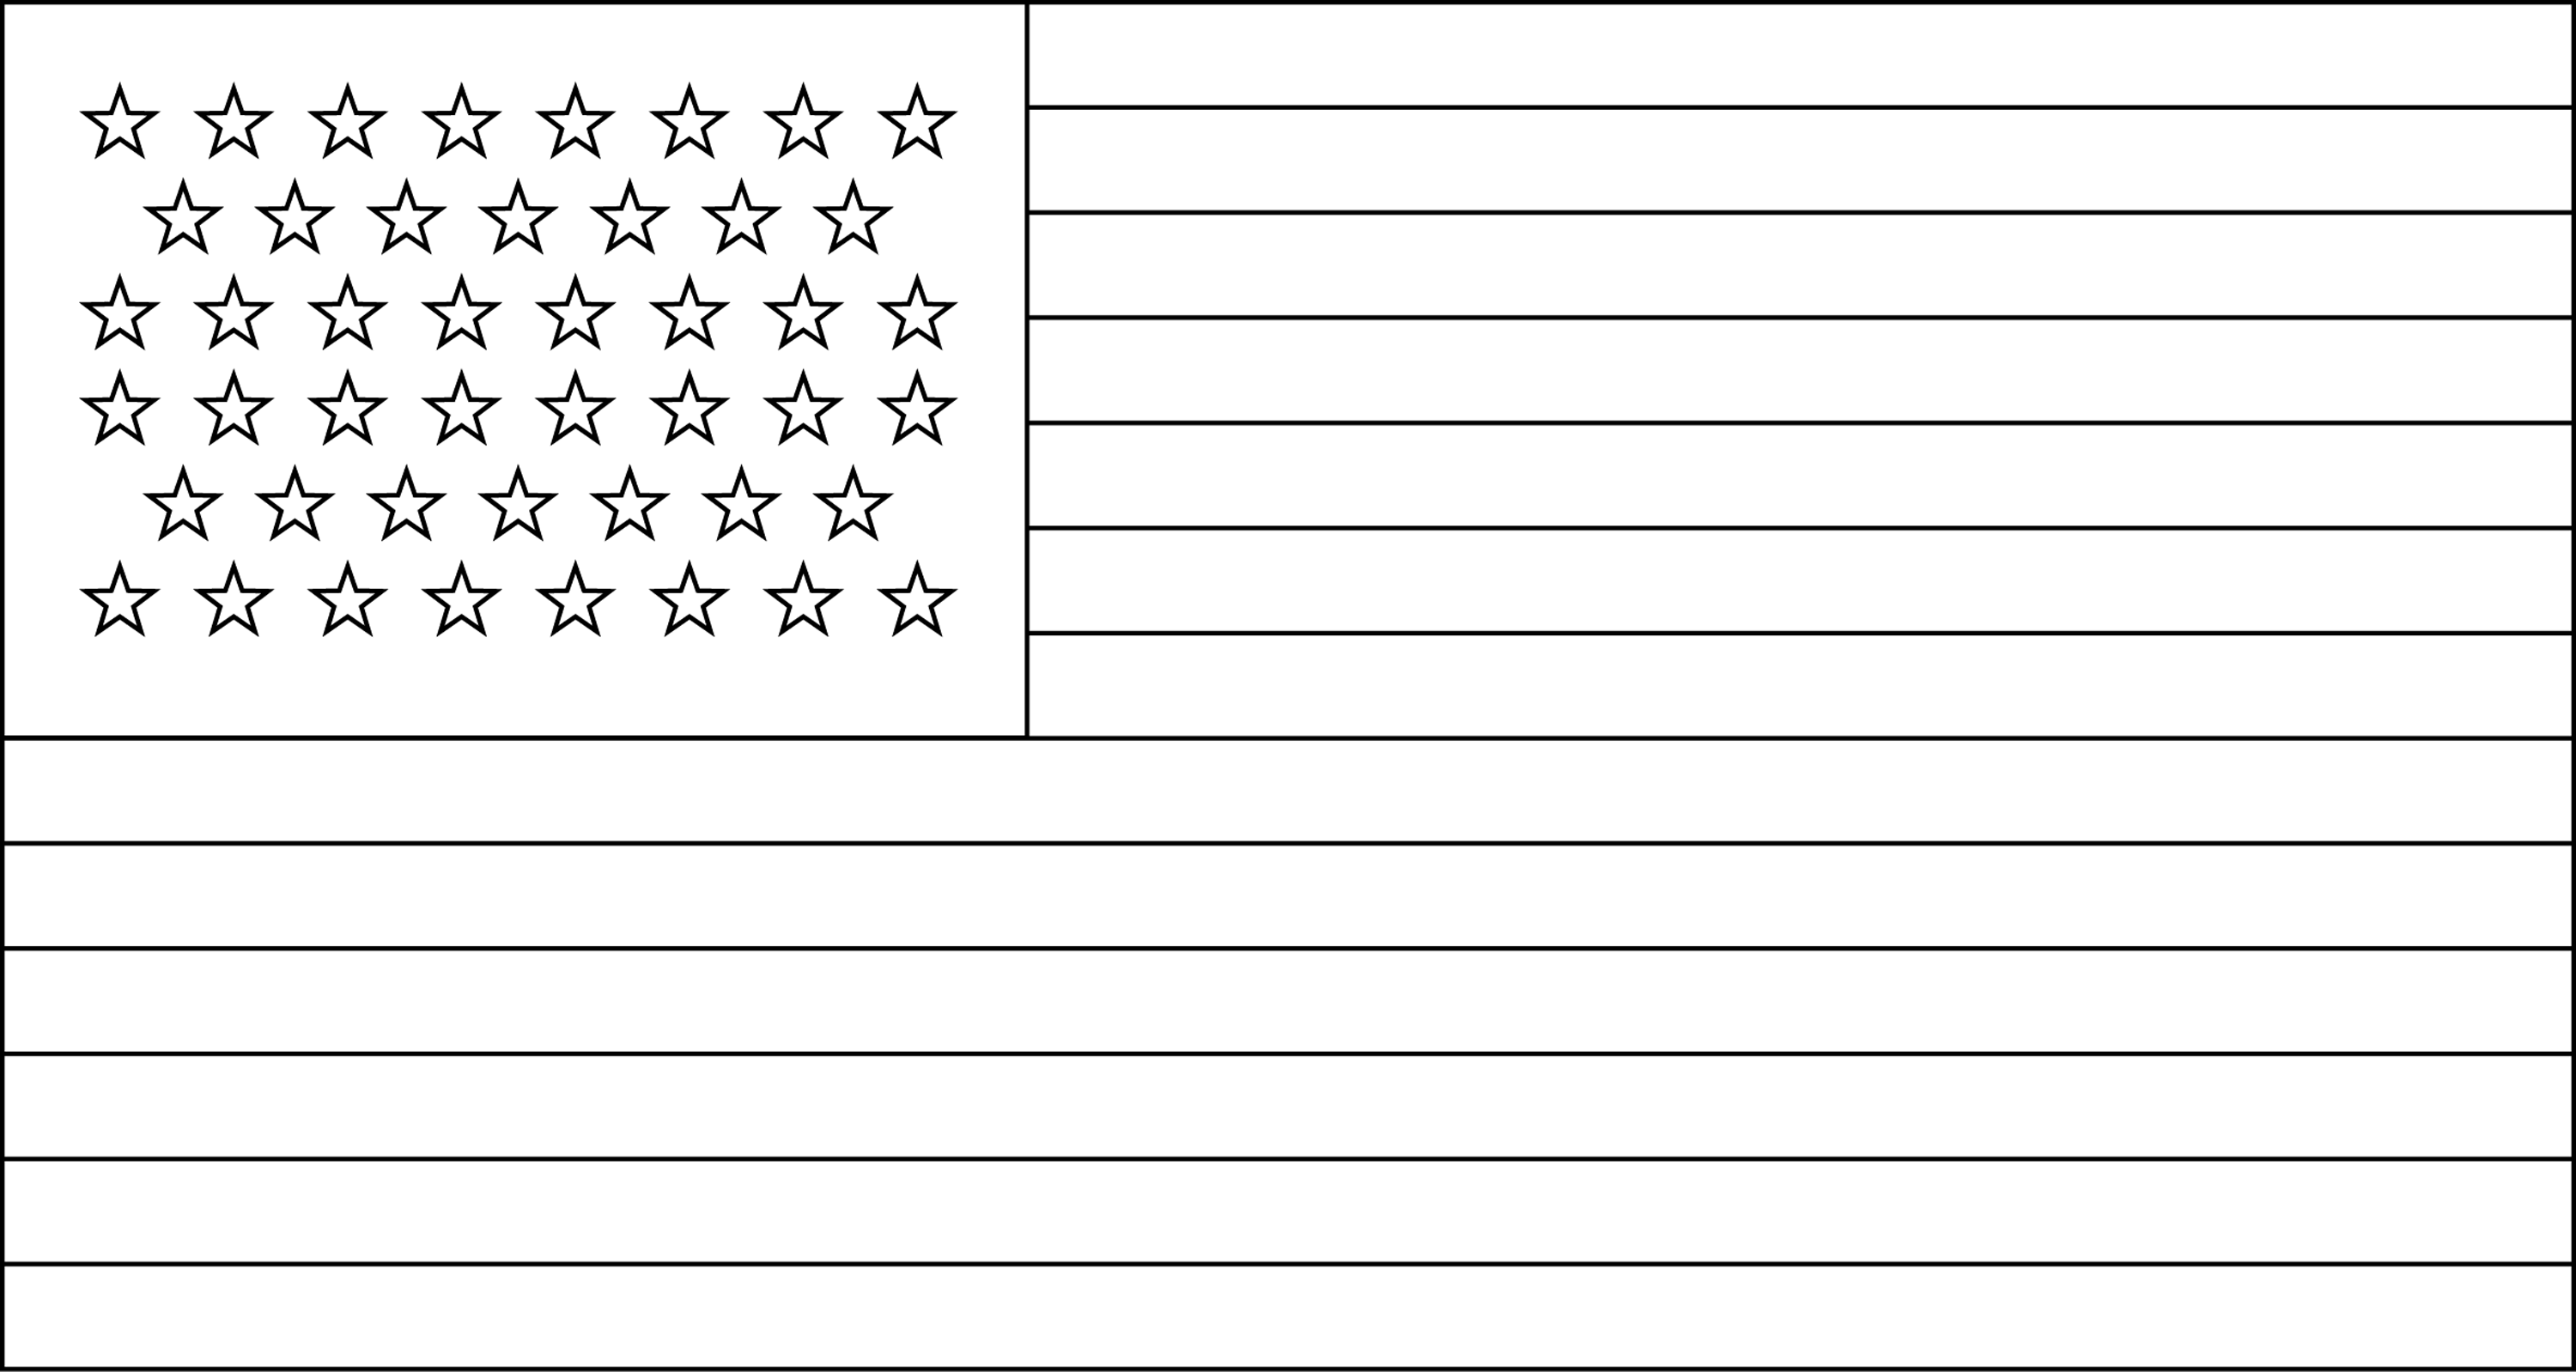 46 Star United States Flag, 1908 | ClipArt ETC